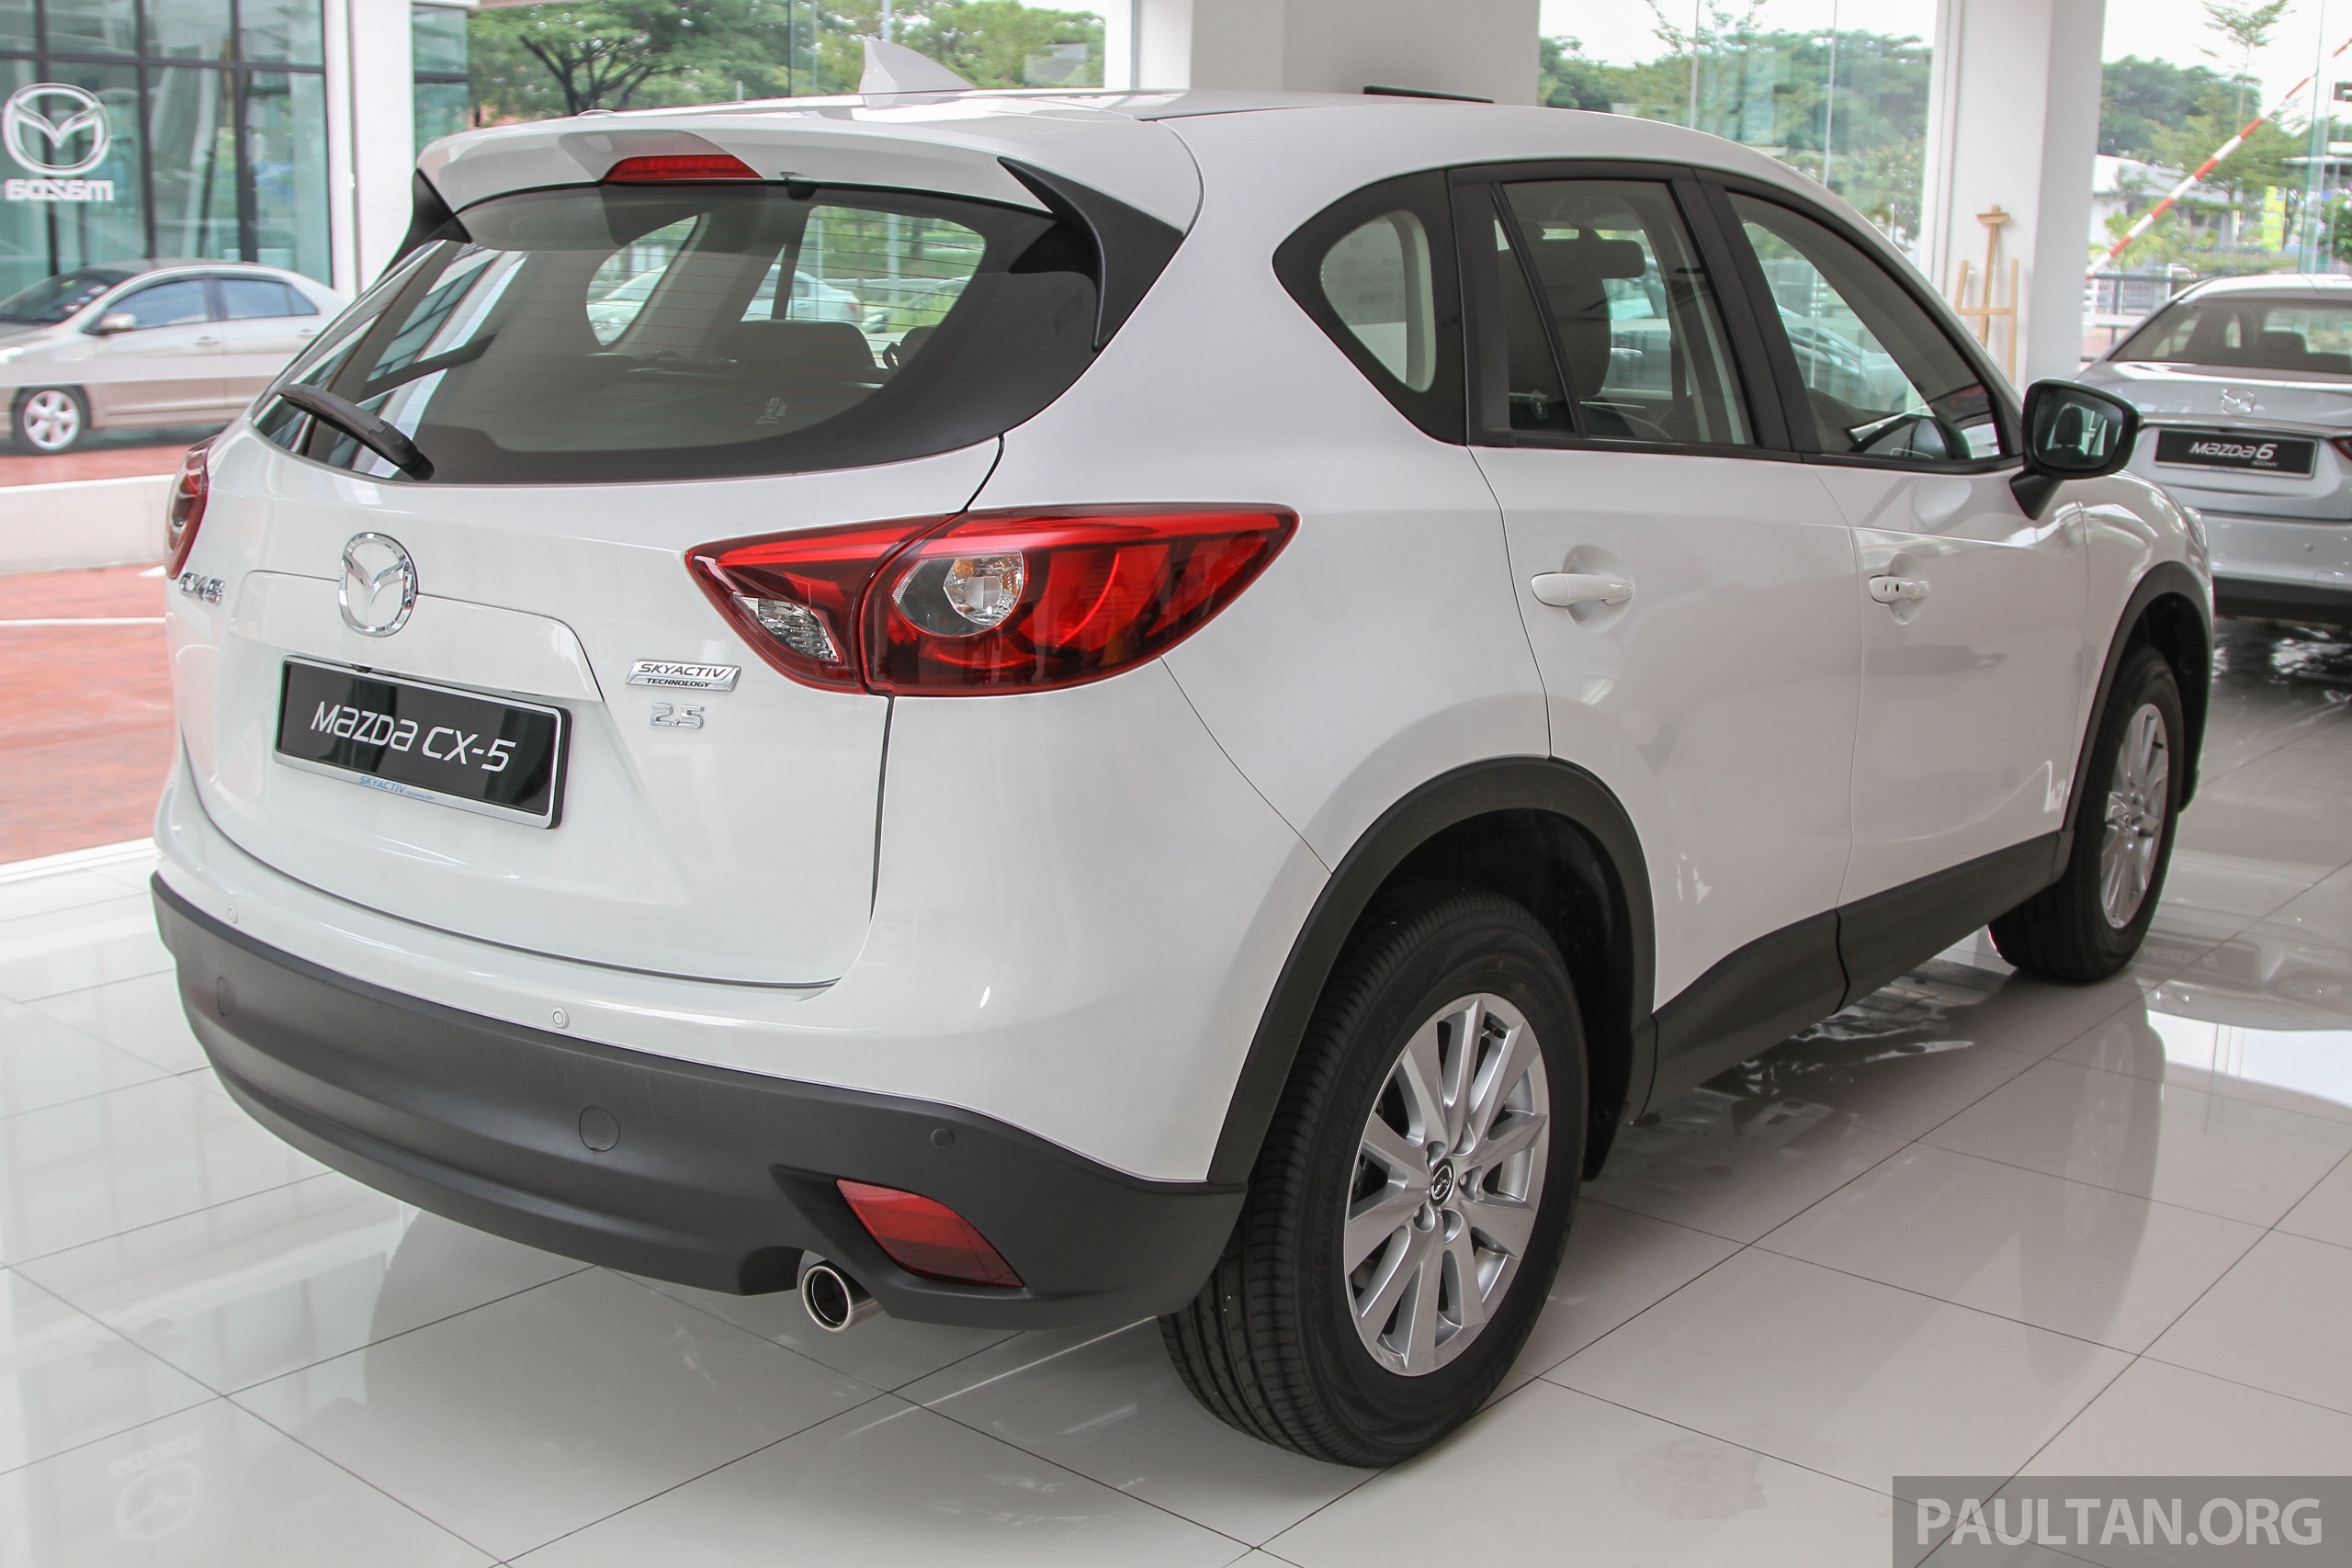 Mazda_CX5_facelift_Malaysia_ 017 Paul Tan's Automotive News